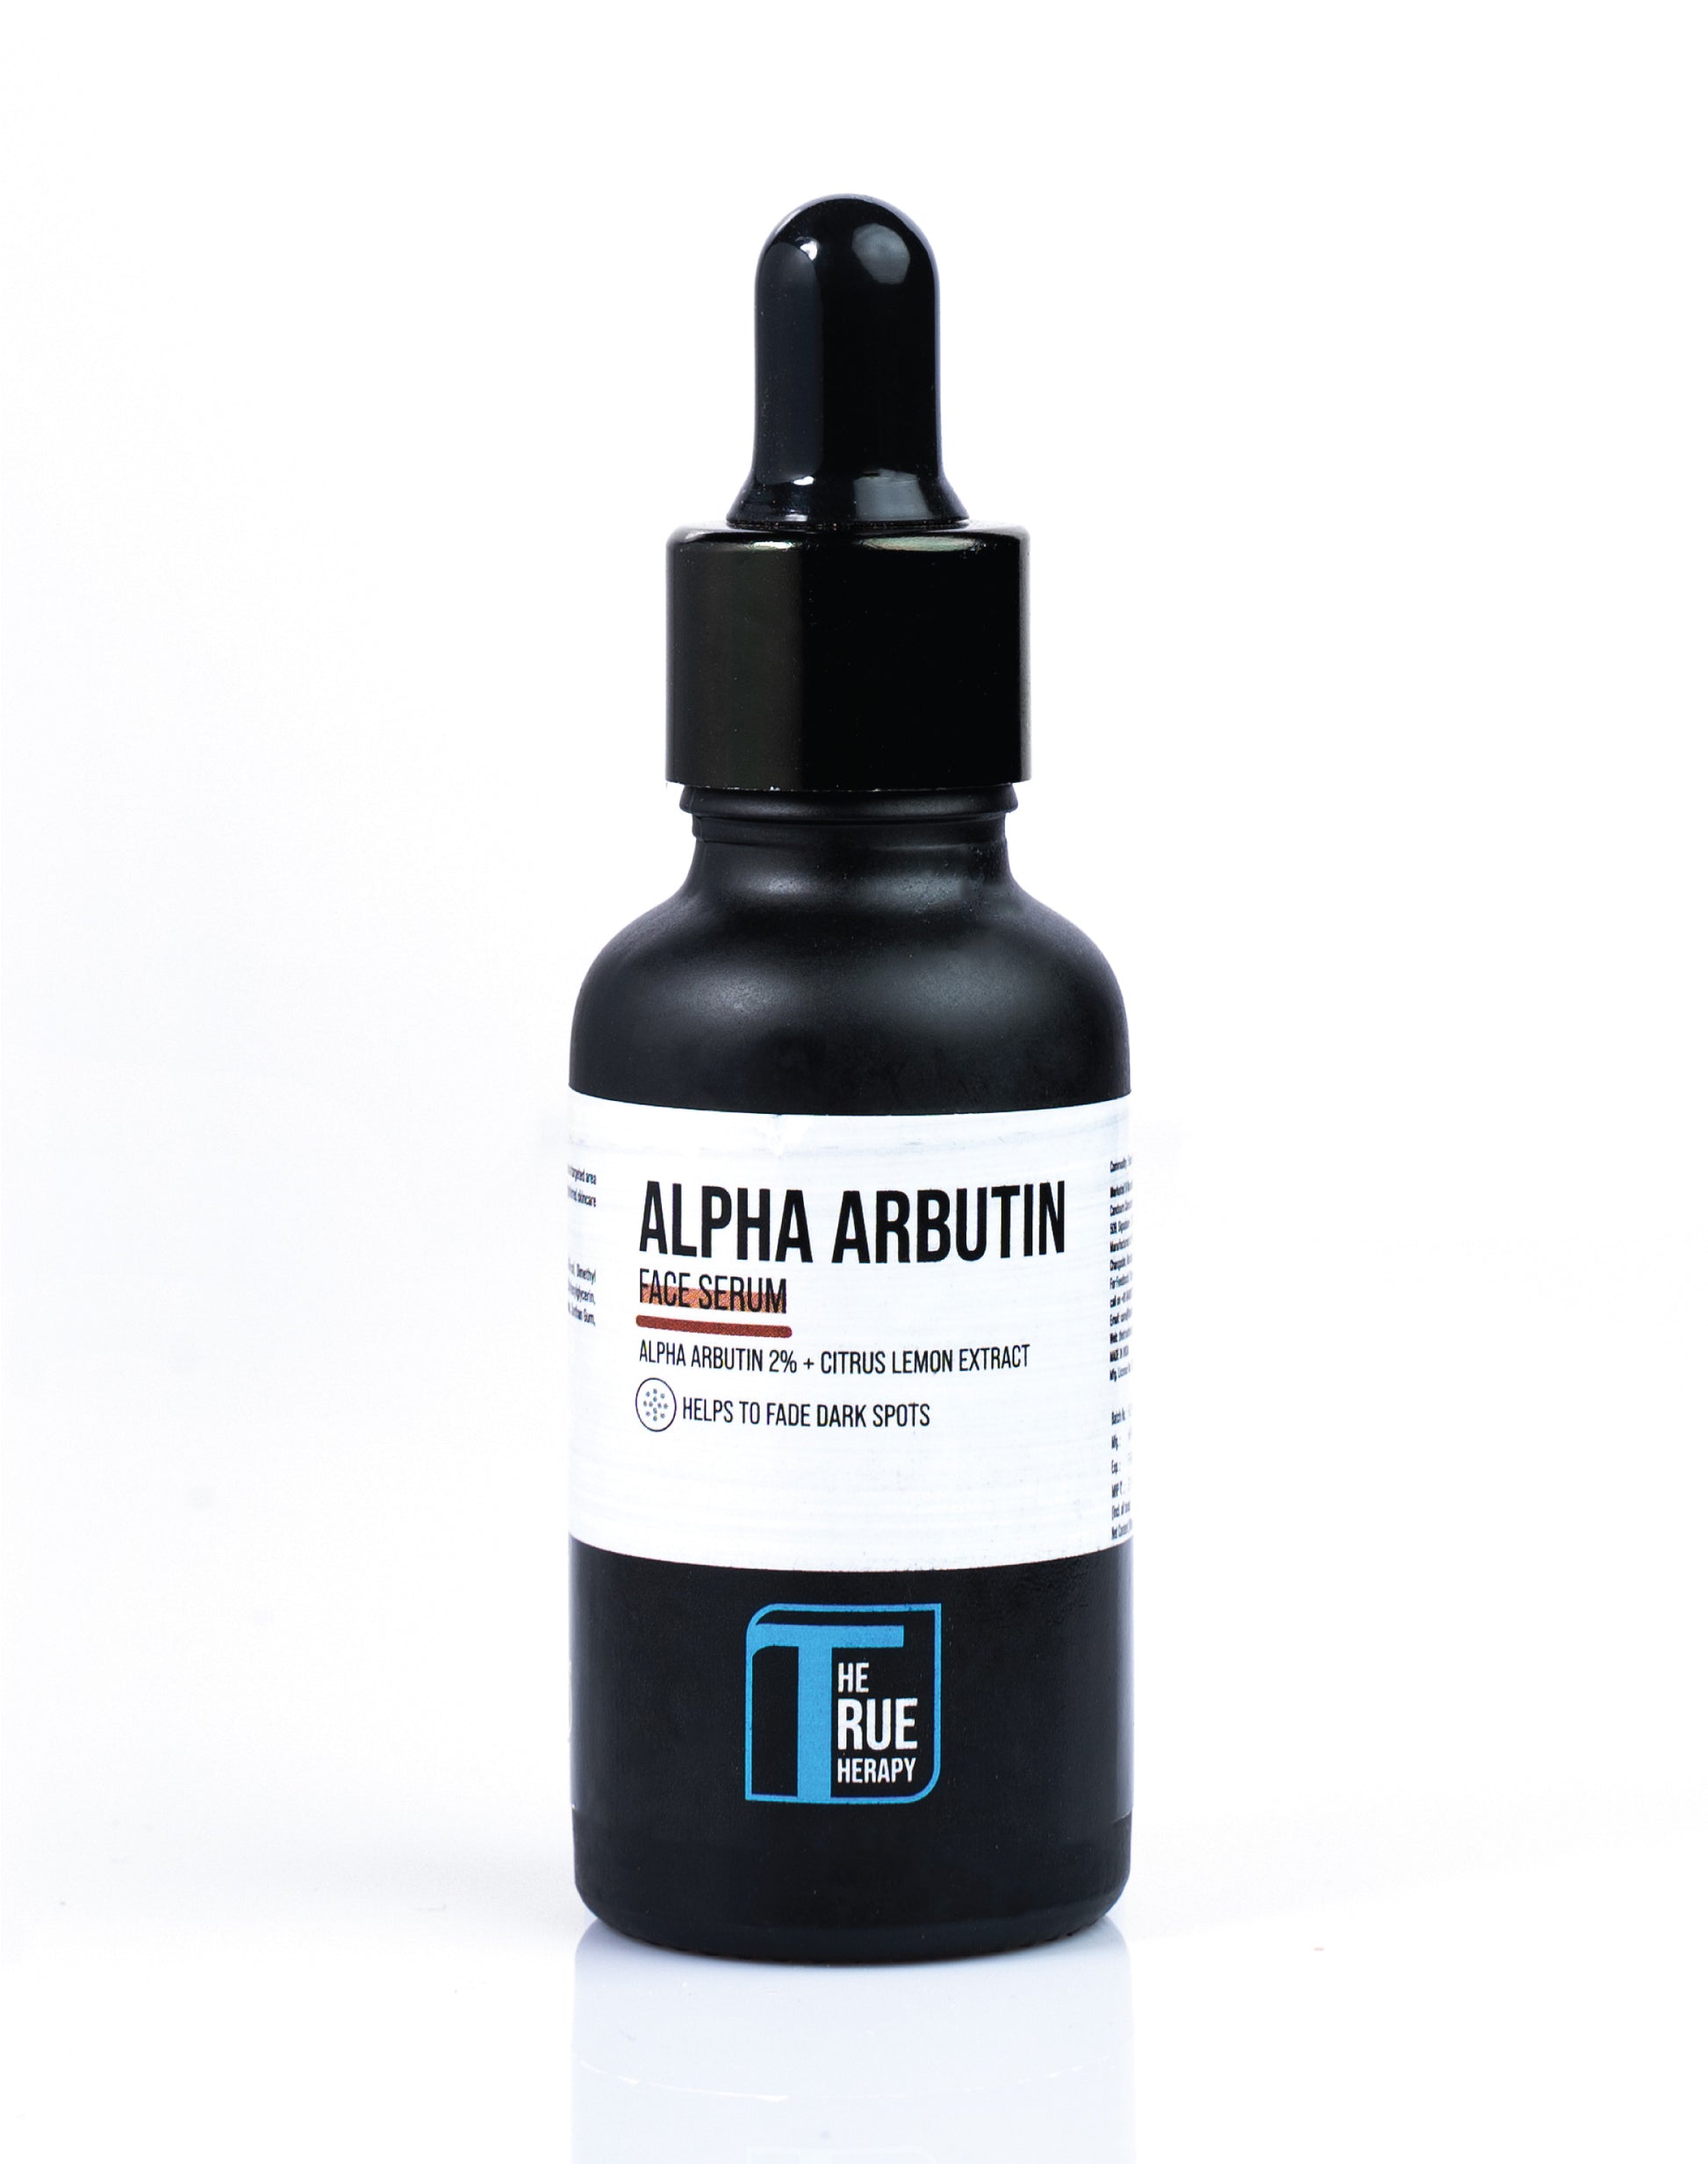 Aravi Organic 2% Alpha Arbutin Face Serum for Pigmentation, Dark Spots &  Tan Removal, Radiance & Glow, Sun Tanning, Removes Blemishes, Uneven  Skin Tone